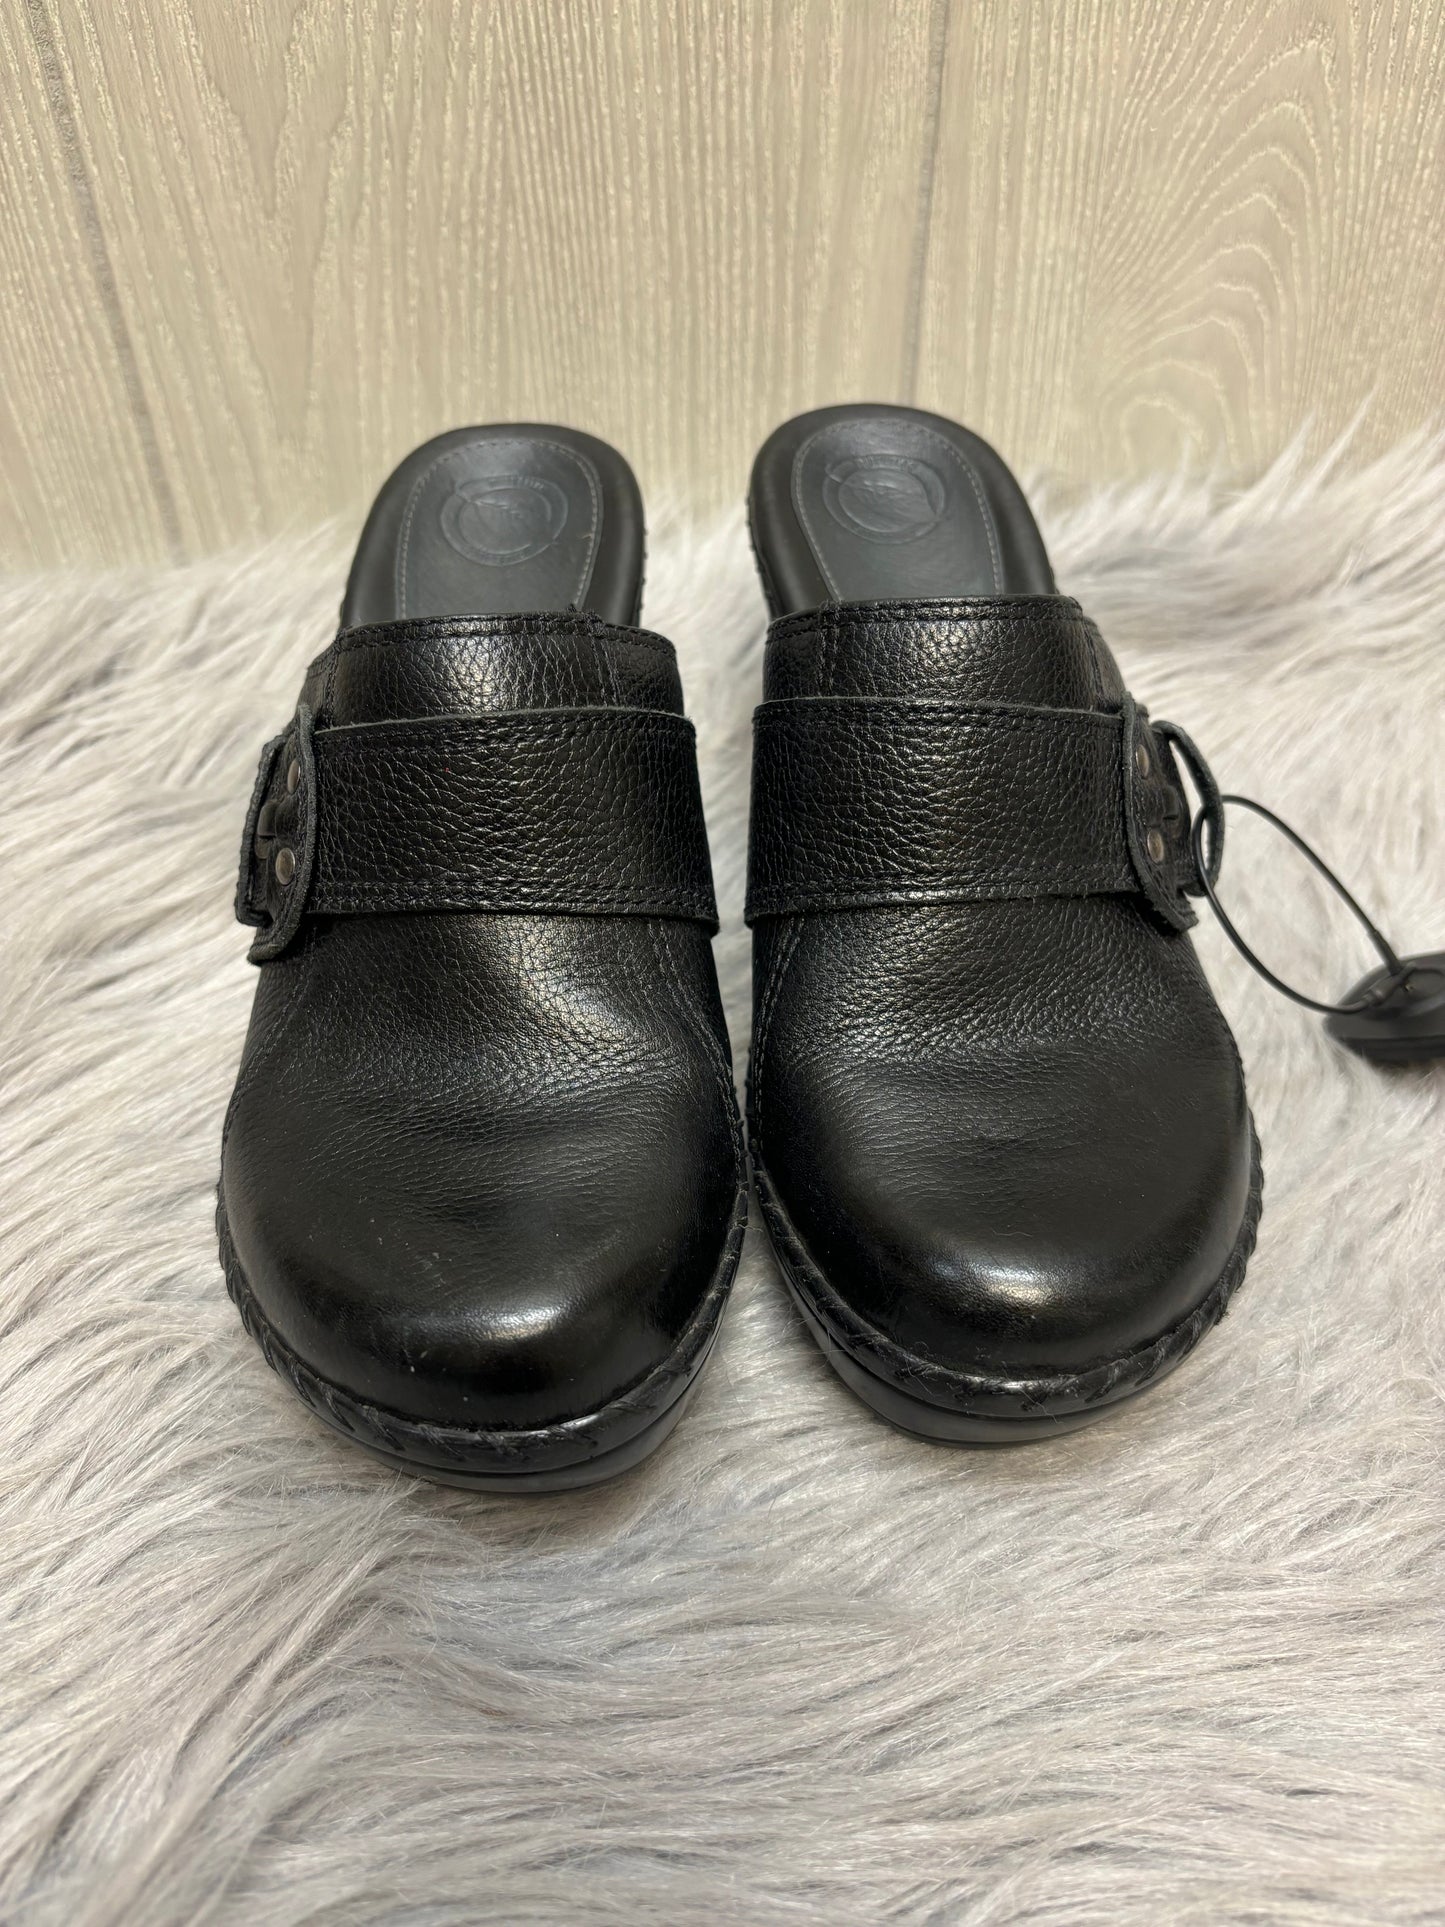 Black Shoes Heels Block Nurture, Size 7.5